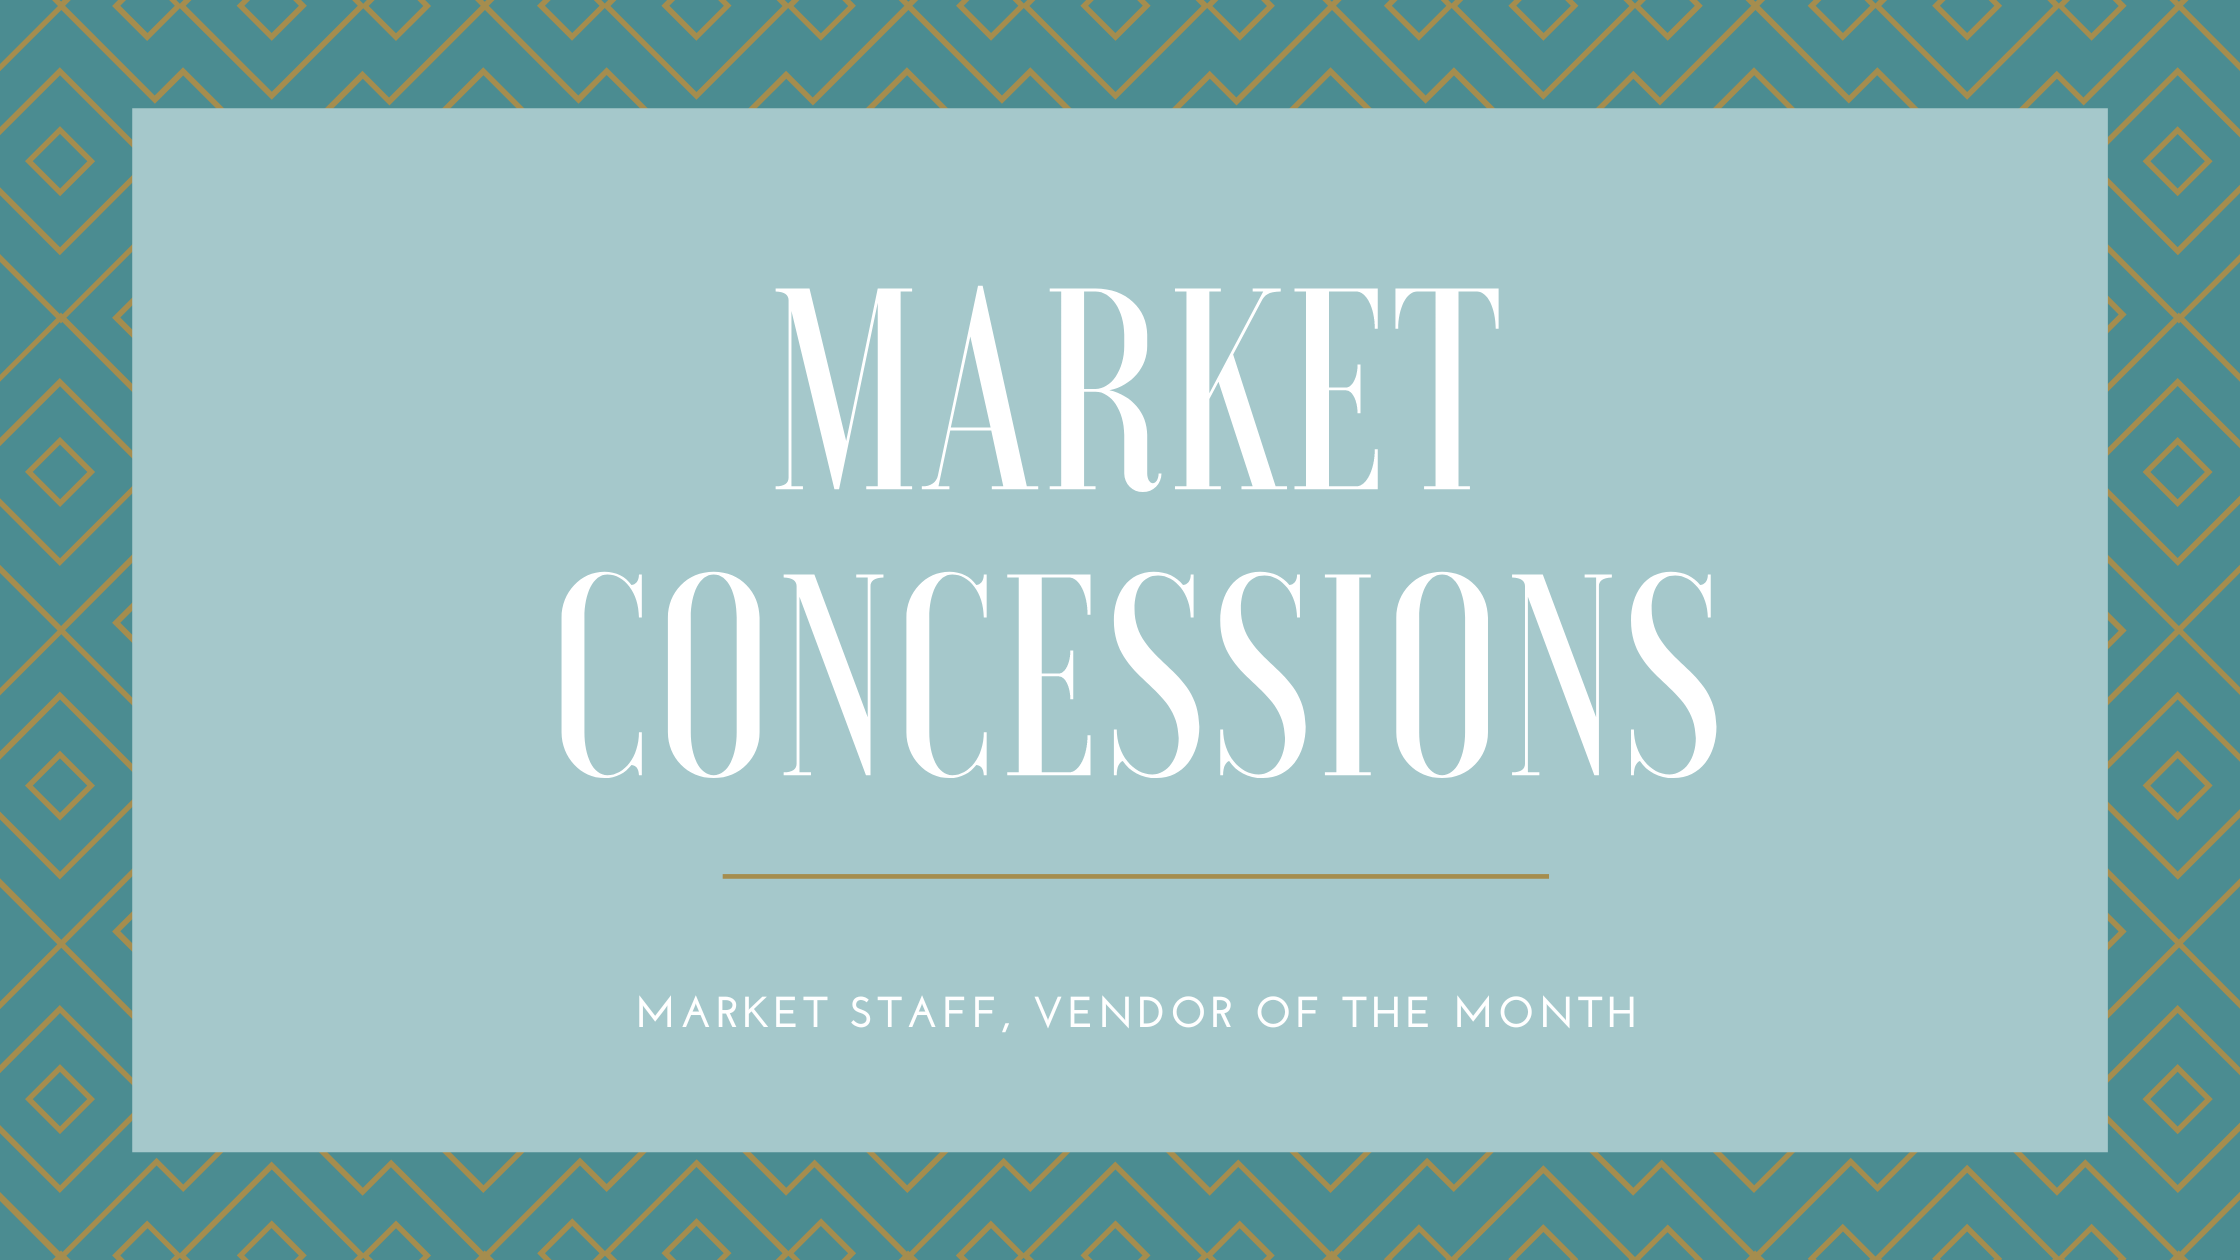 Market Concessions